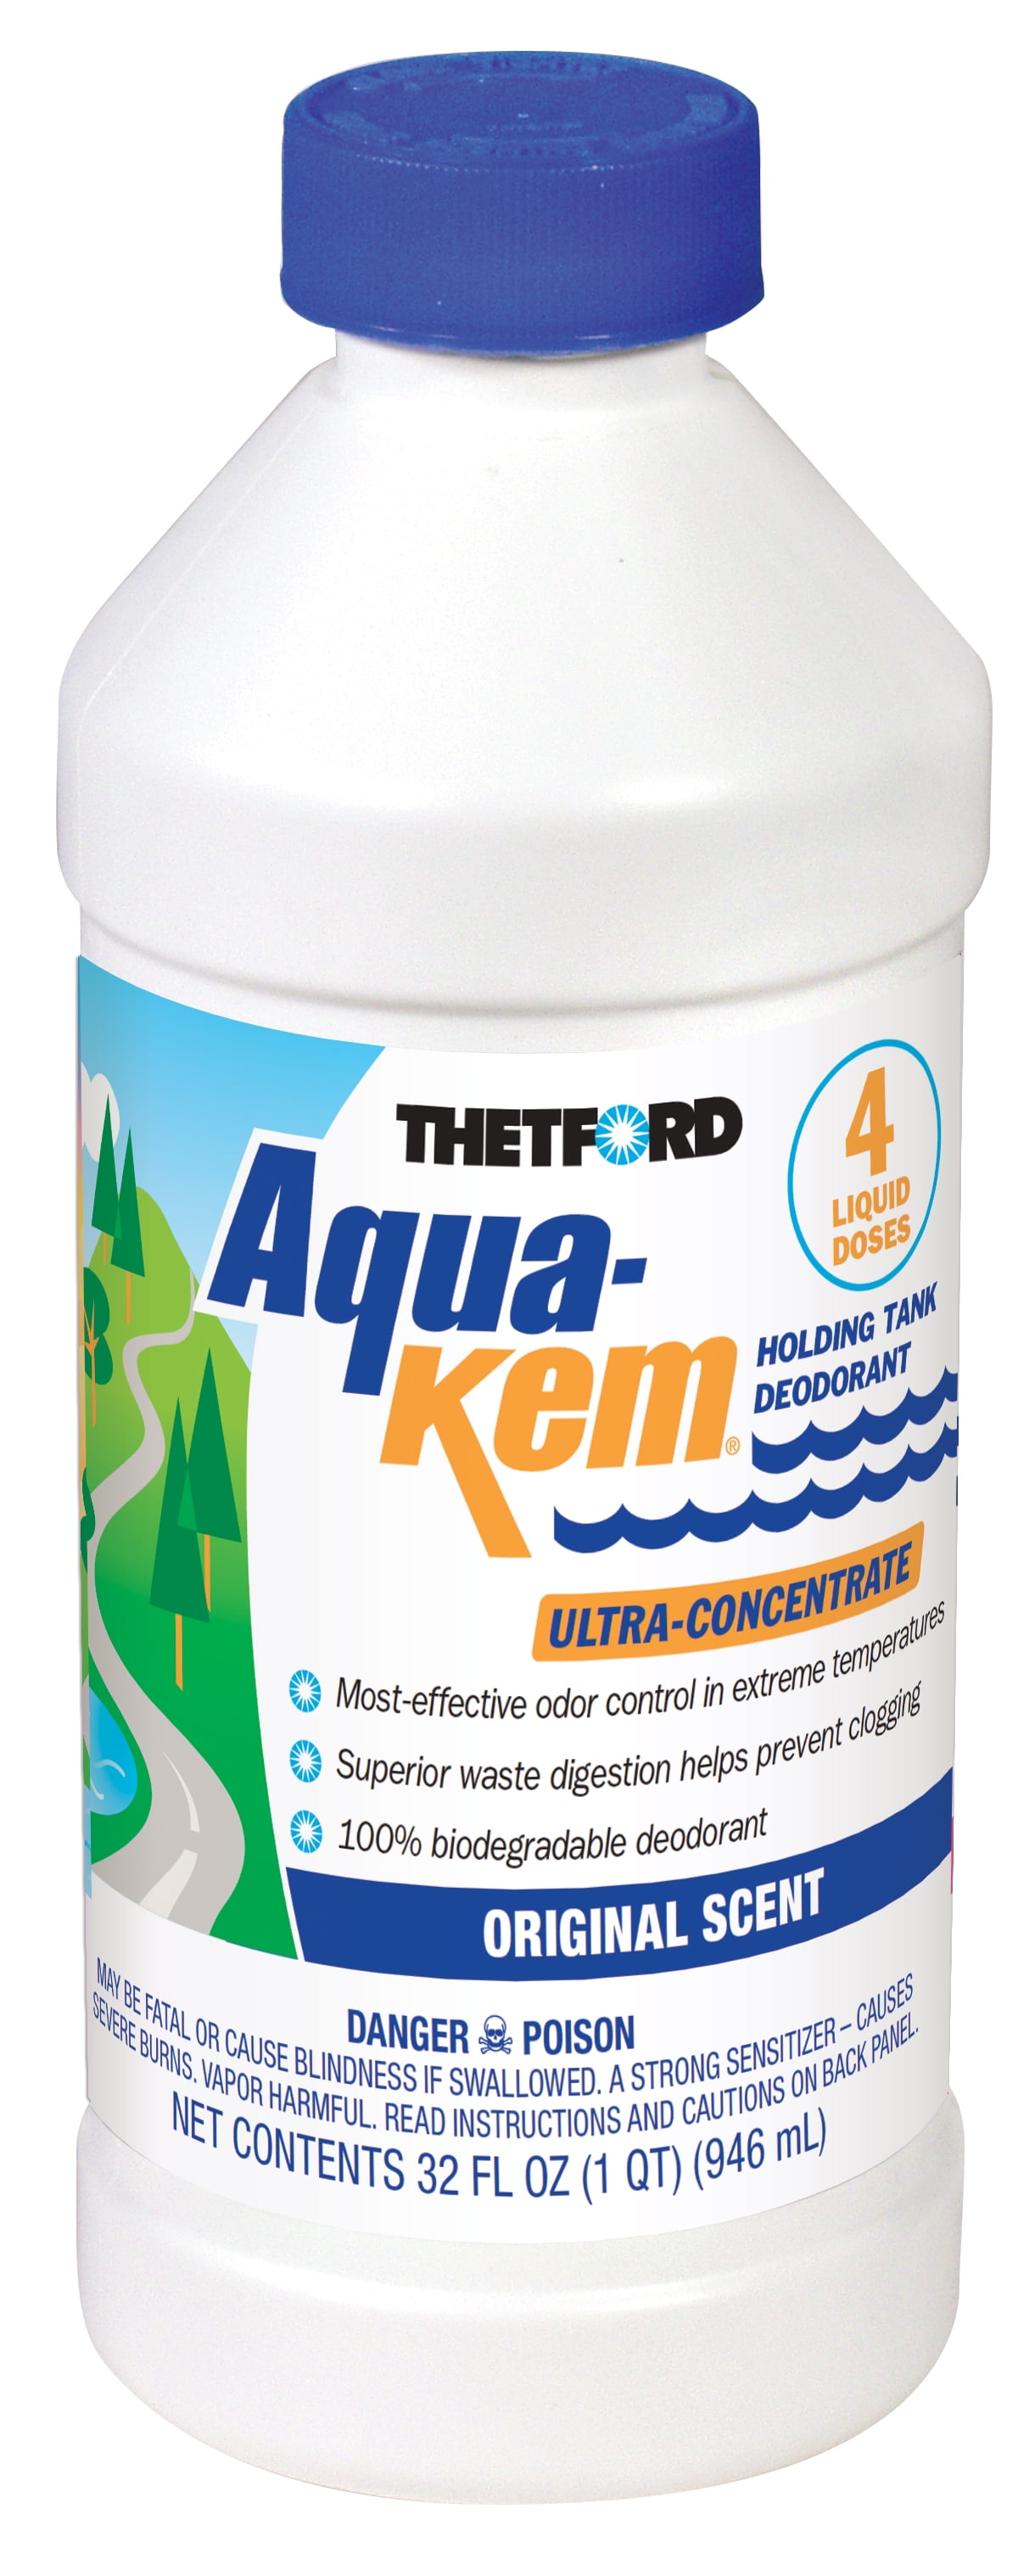 Aqua-Kem RV Holding Tank Treatment Deodorant Waste Digester Detergent  32 oz Thetford 09852